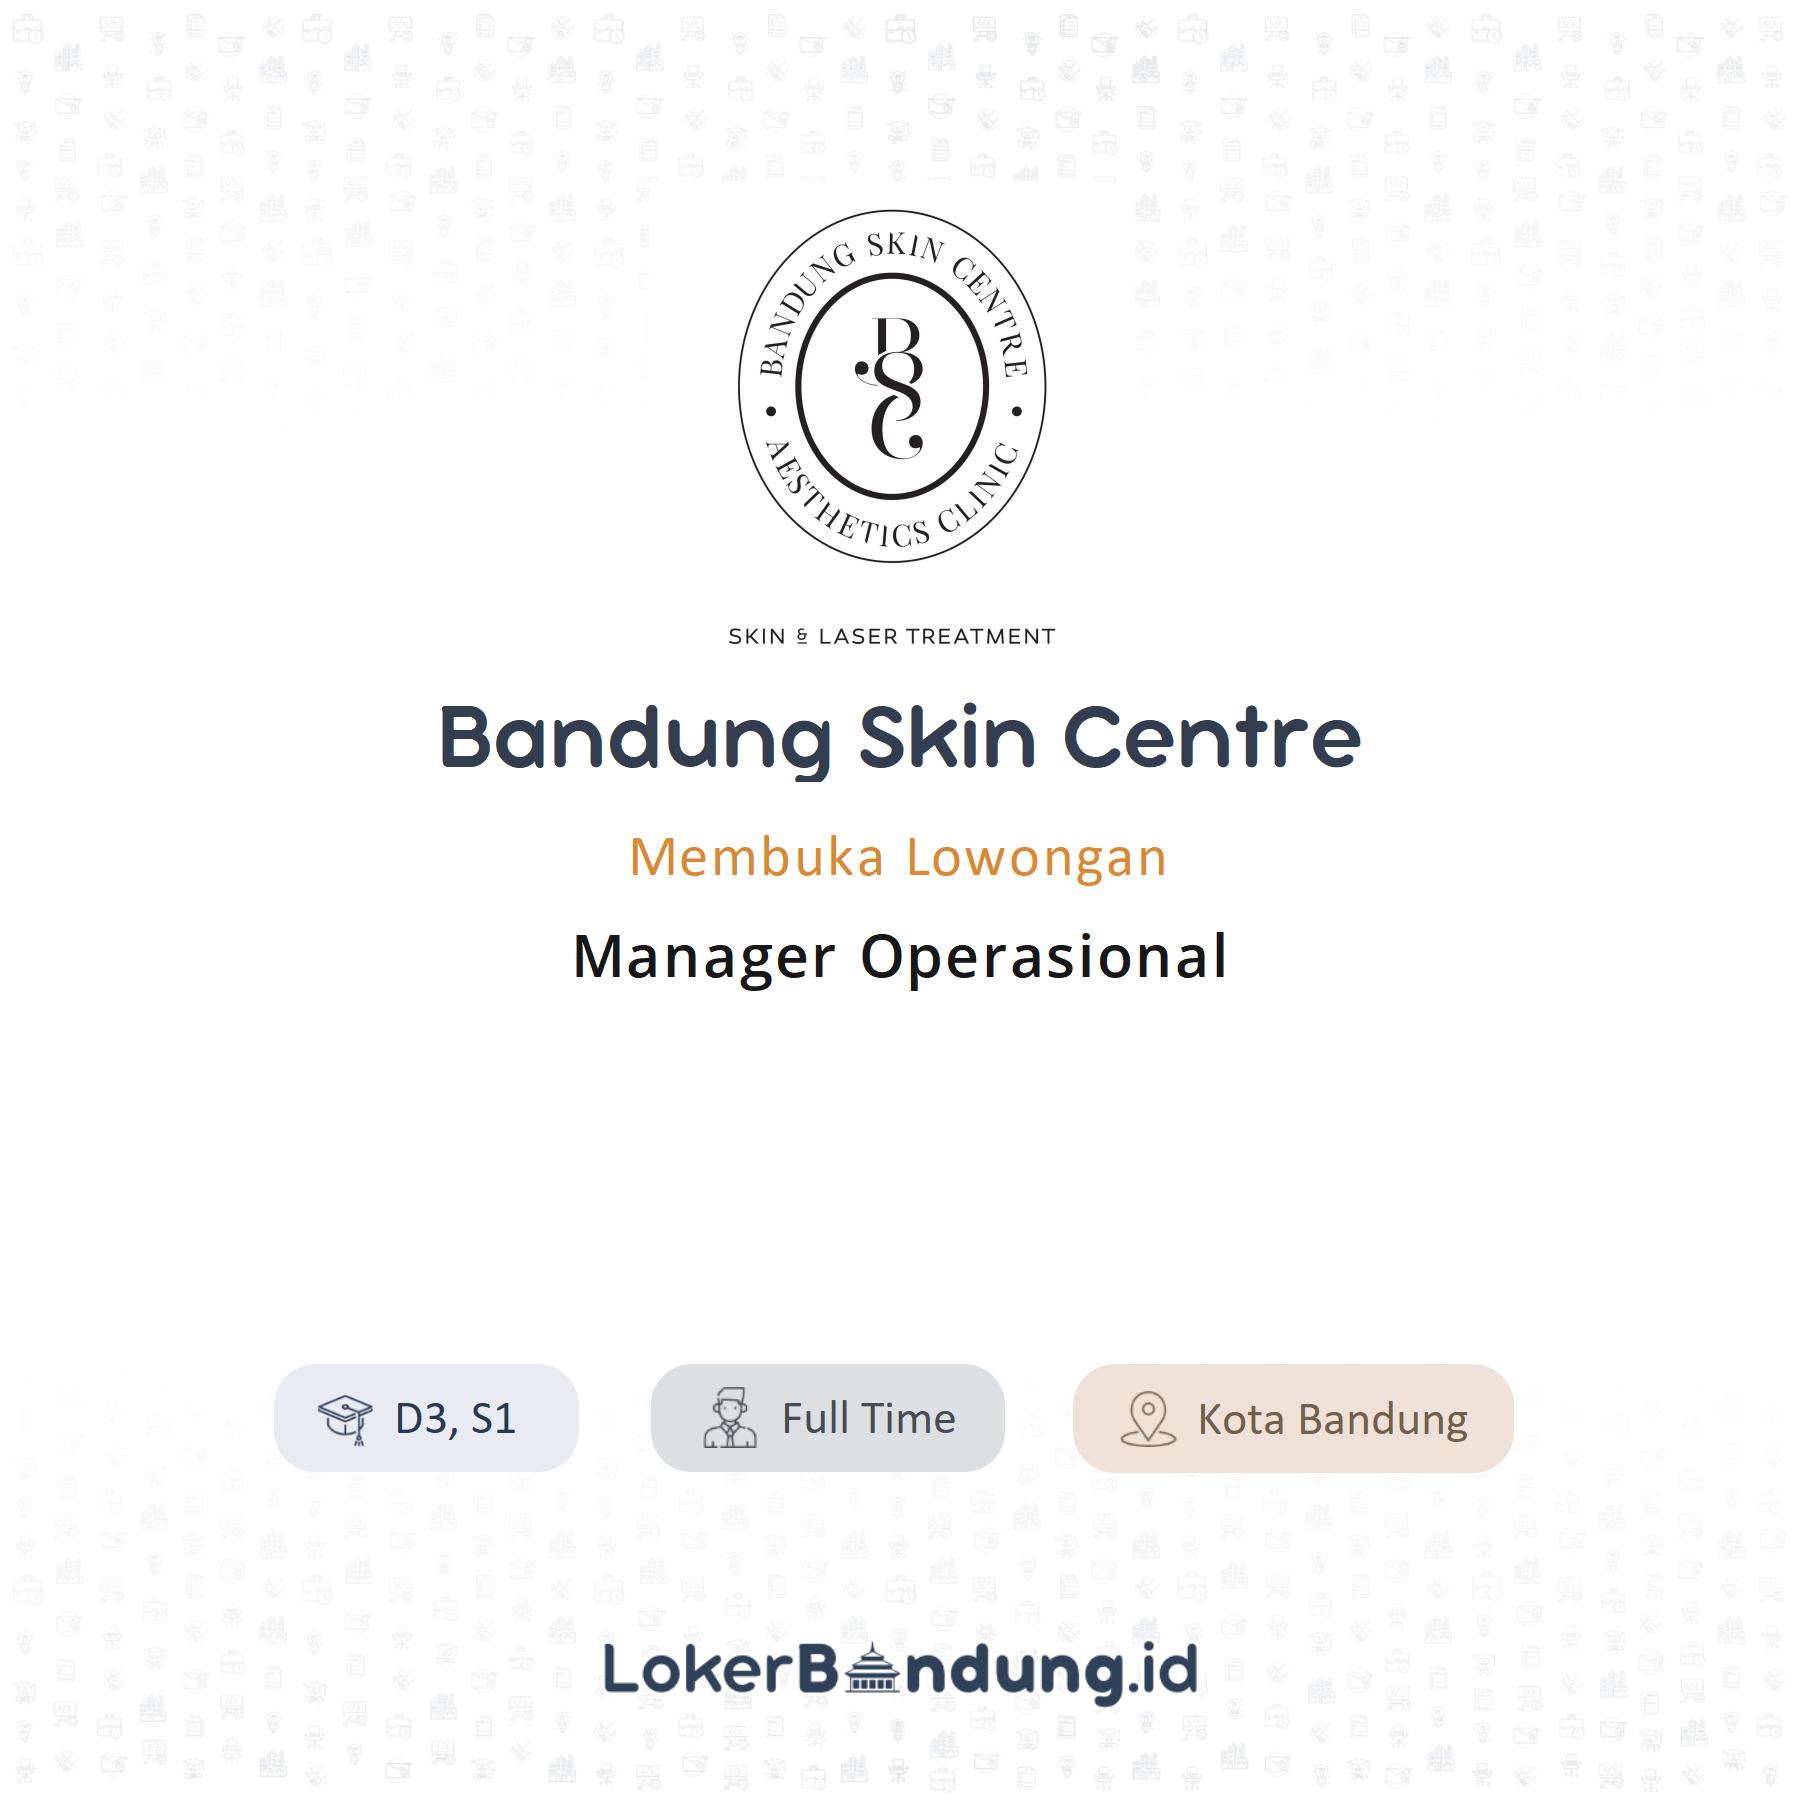 Bandung Skin Centre – Manager Operasional